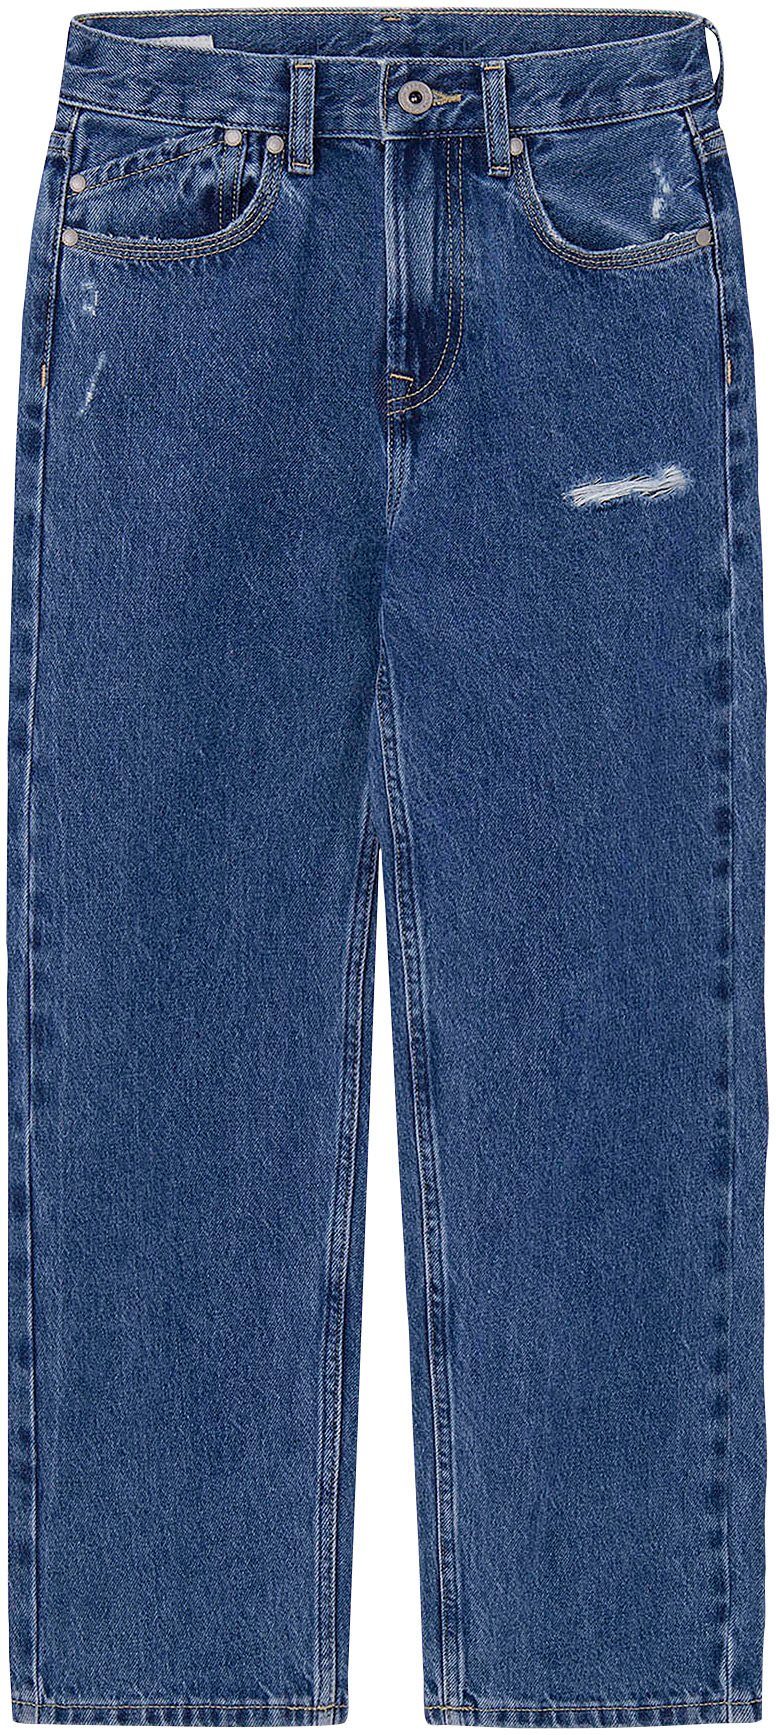 Pepe Jeans 5-pocket jeans LOOSE REPAIR